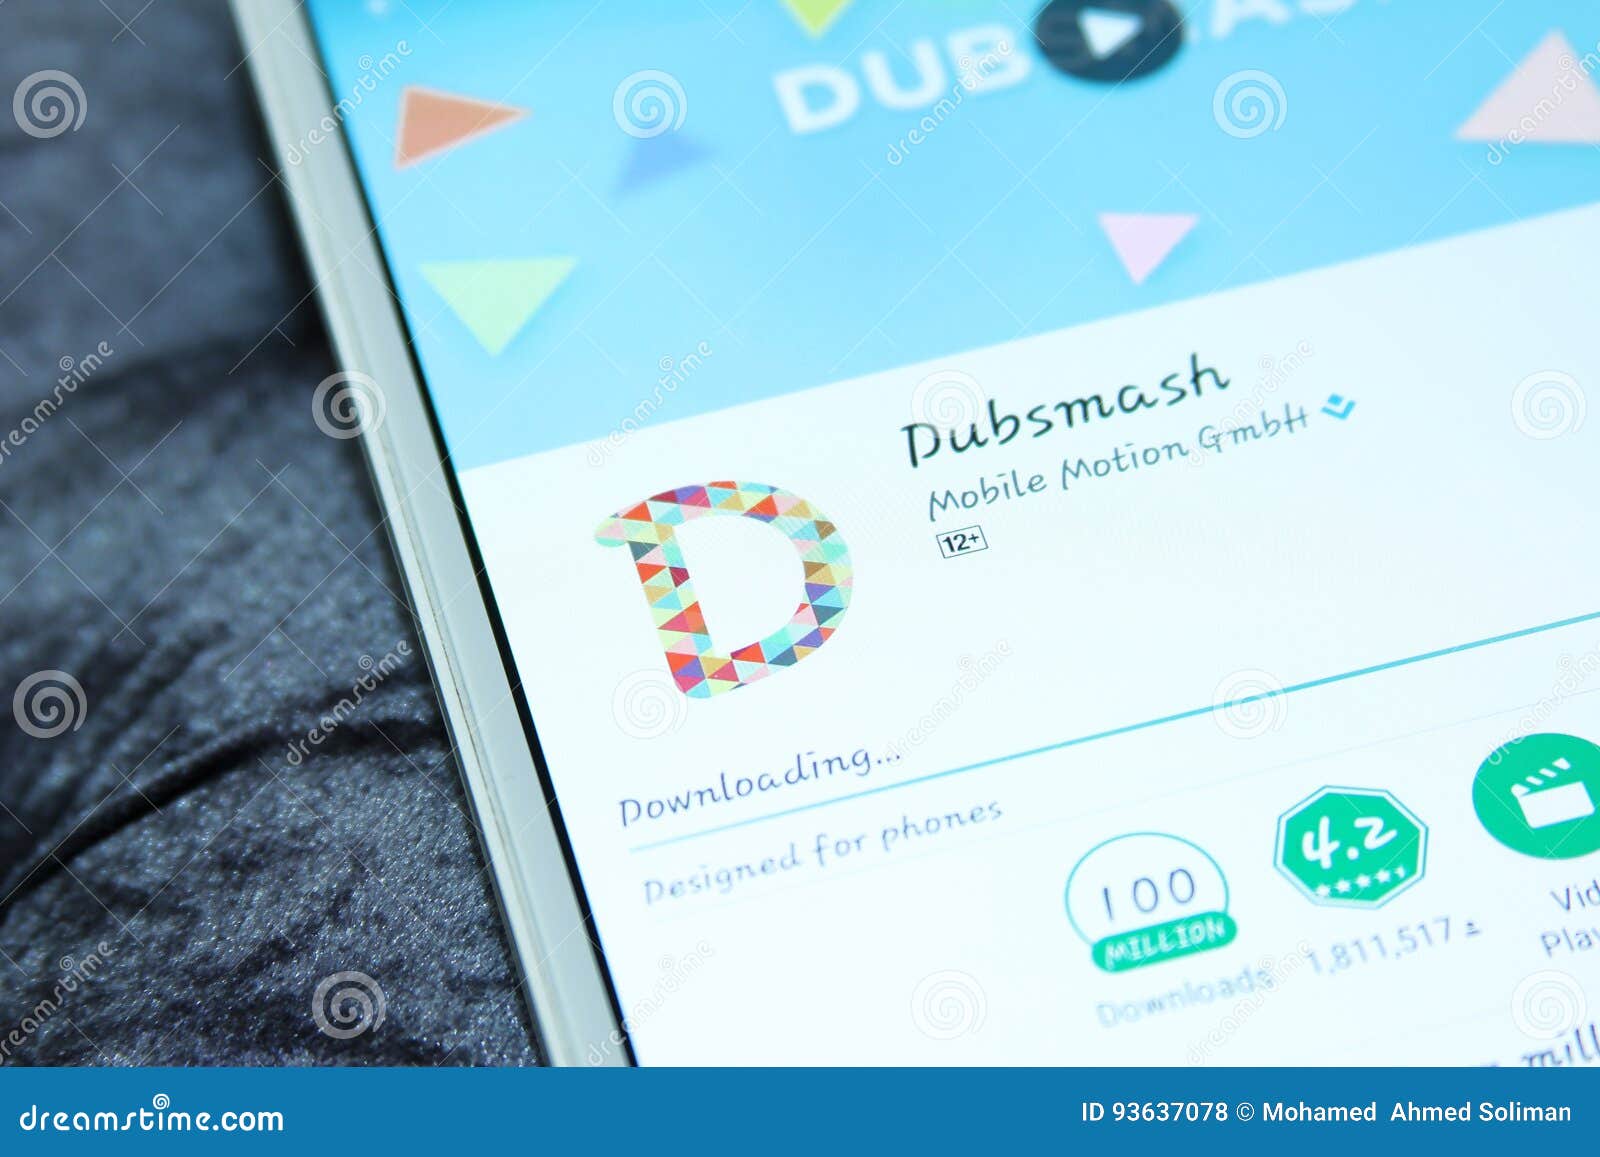 Dubsmash Mobile App Editorial Stock Photo Image Of Logo 93637078